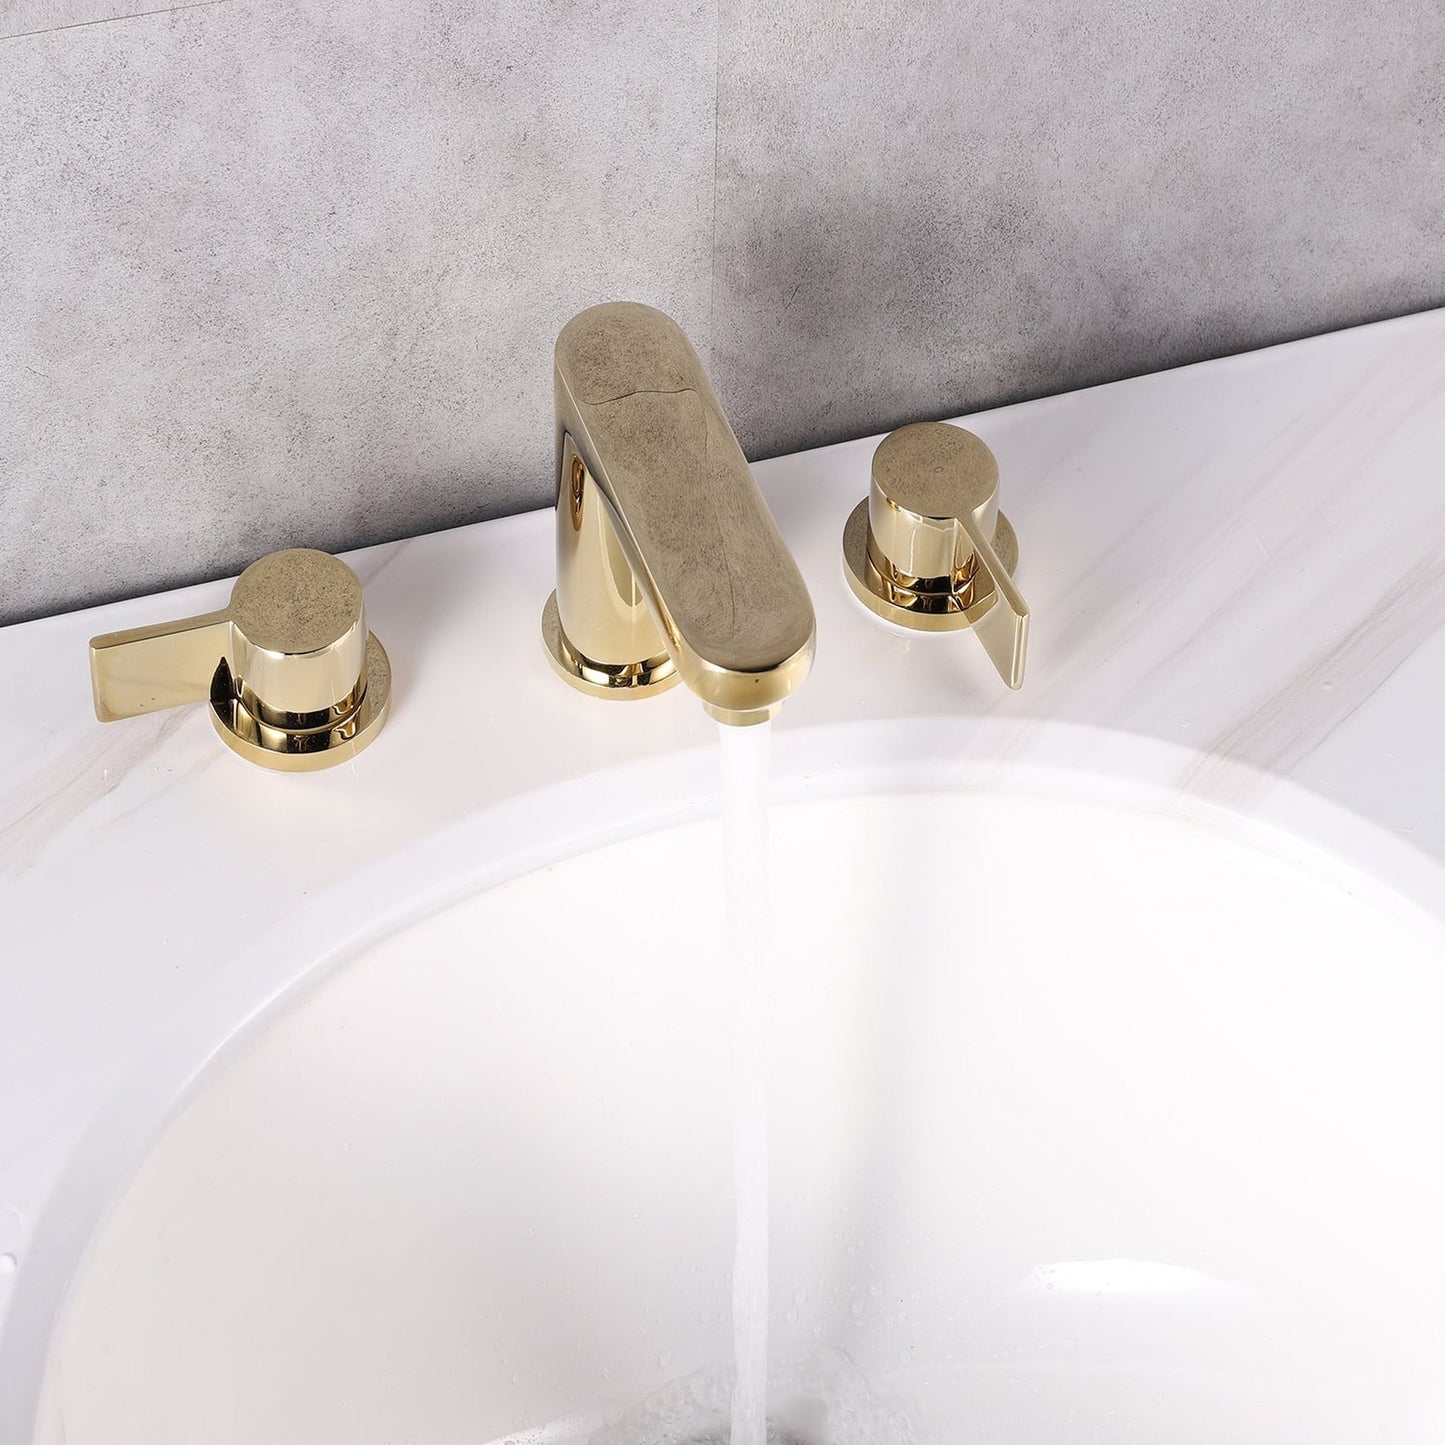 Eviva Curvy Gold Coated Widespread Bathroom Sink Faucet